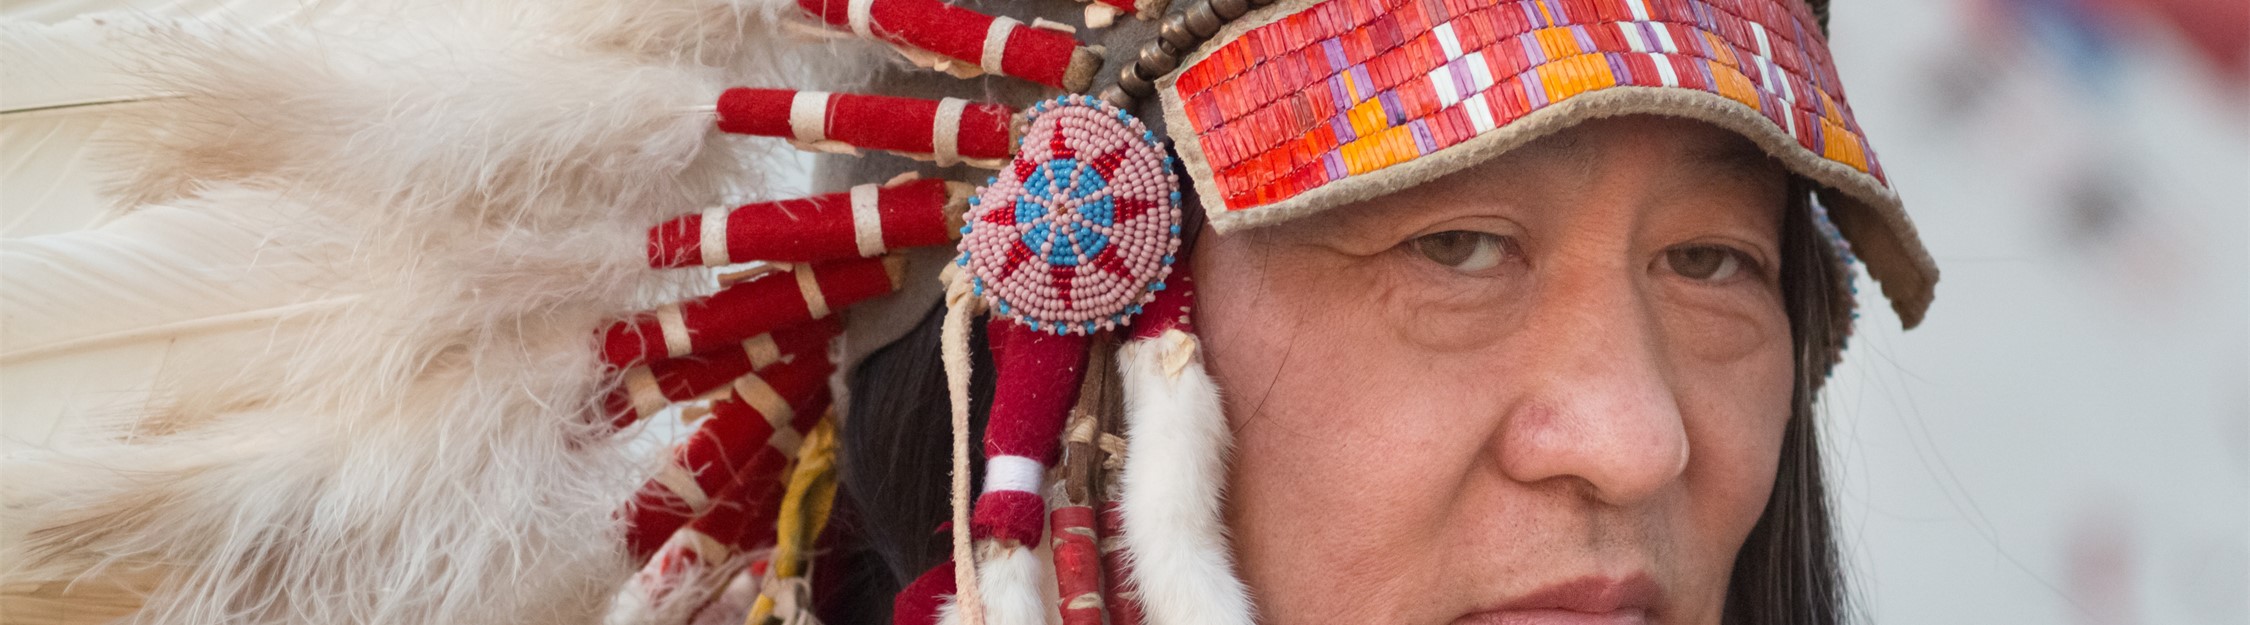 Native American man in regalia